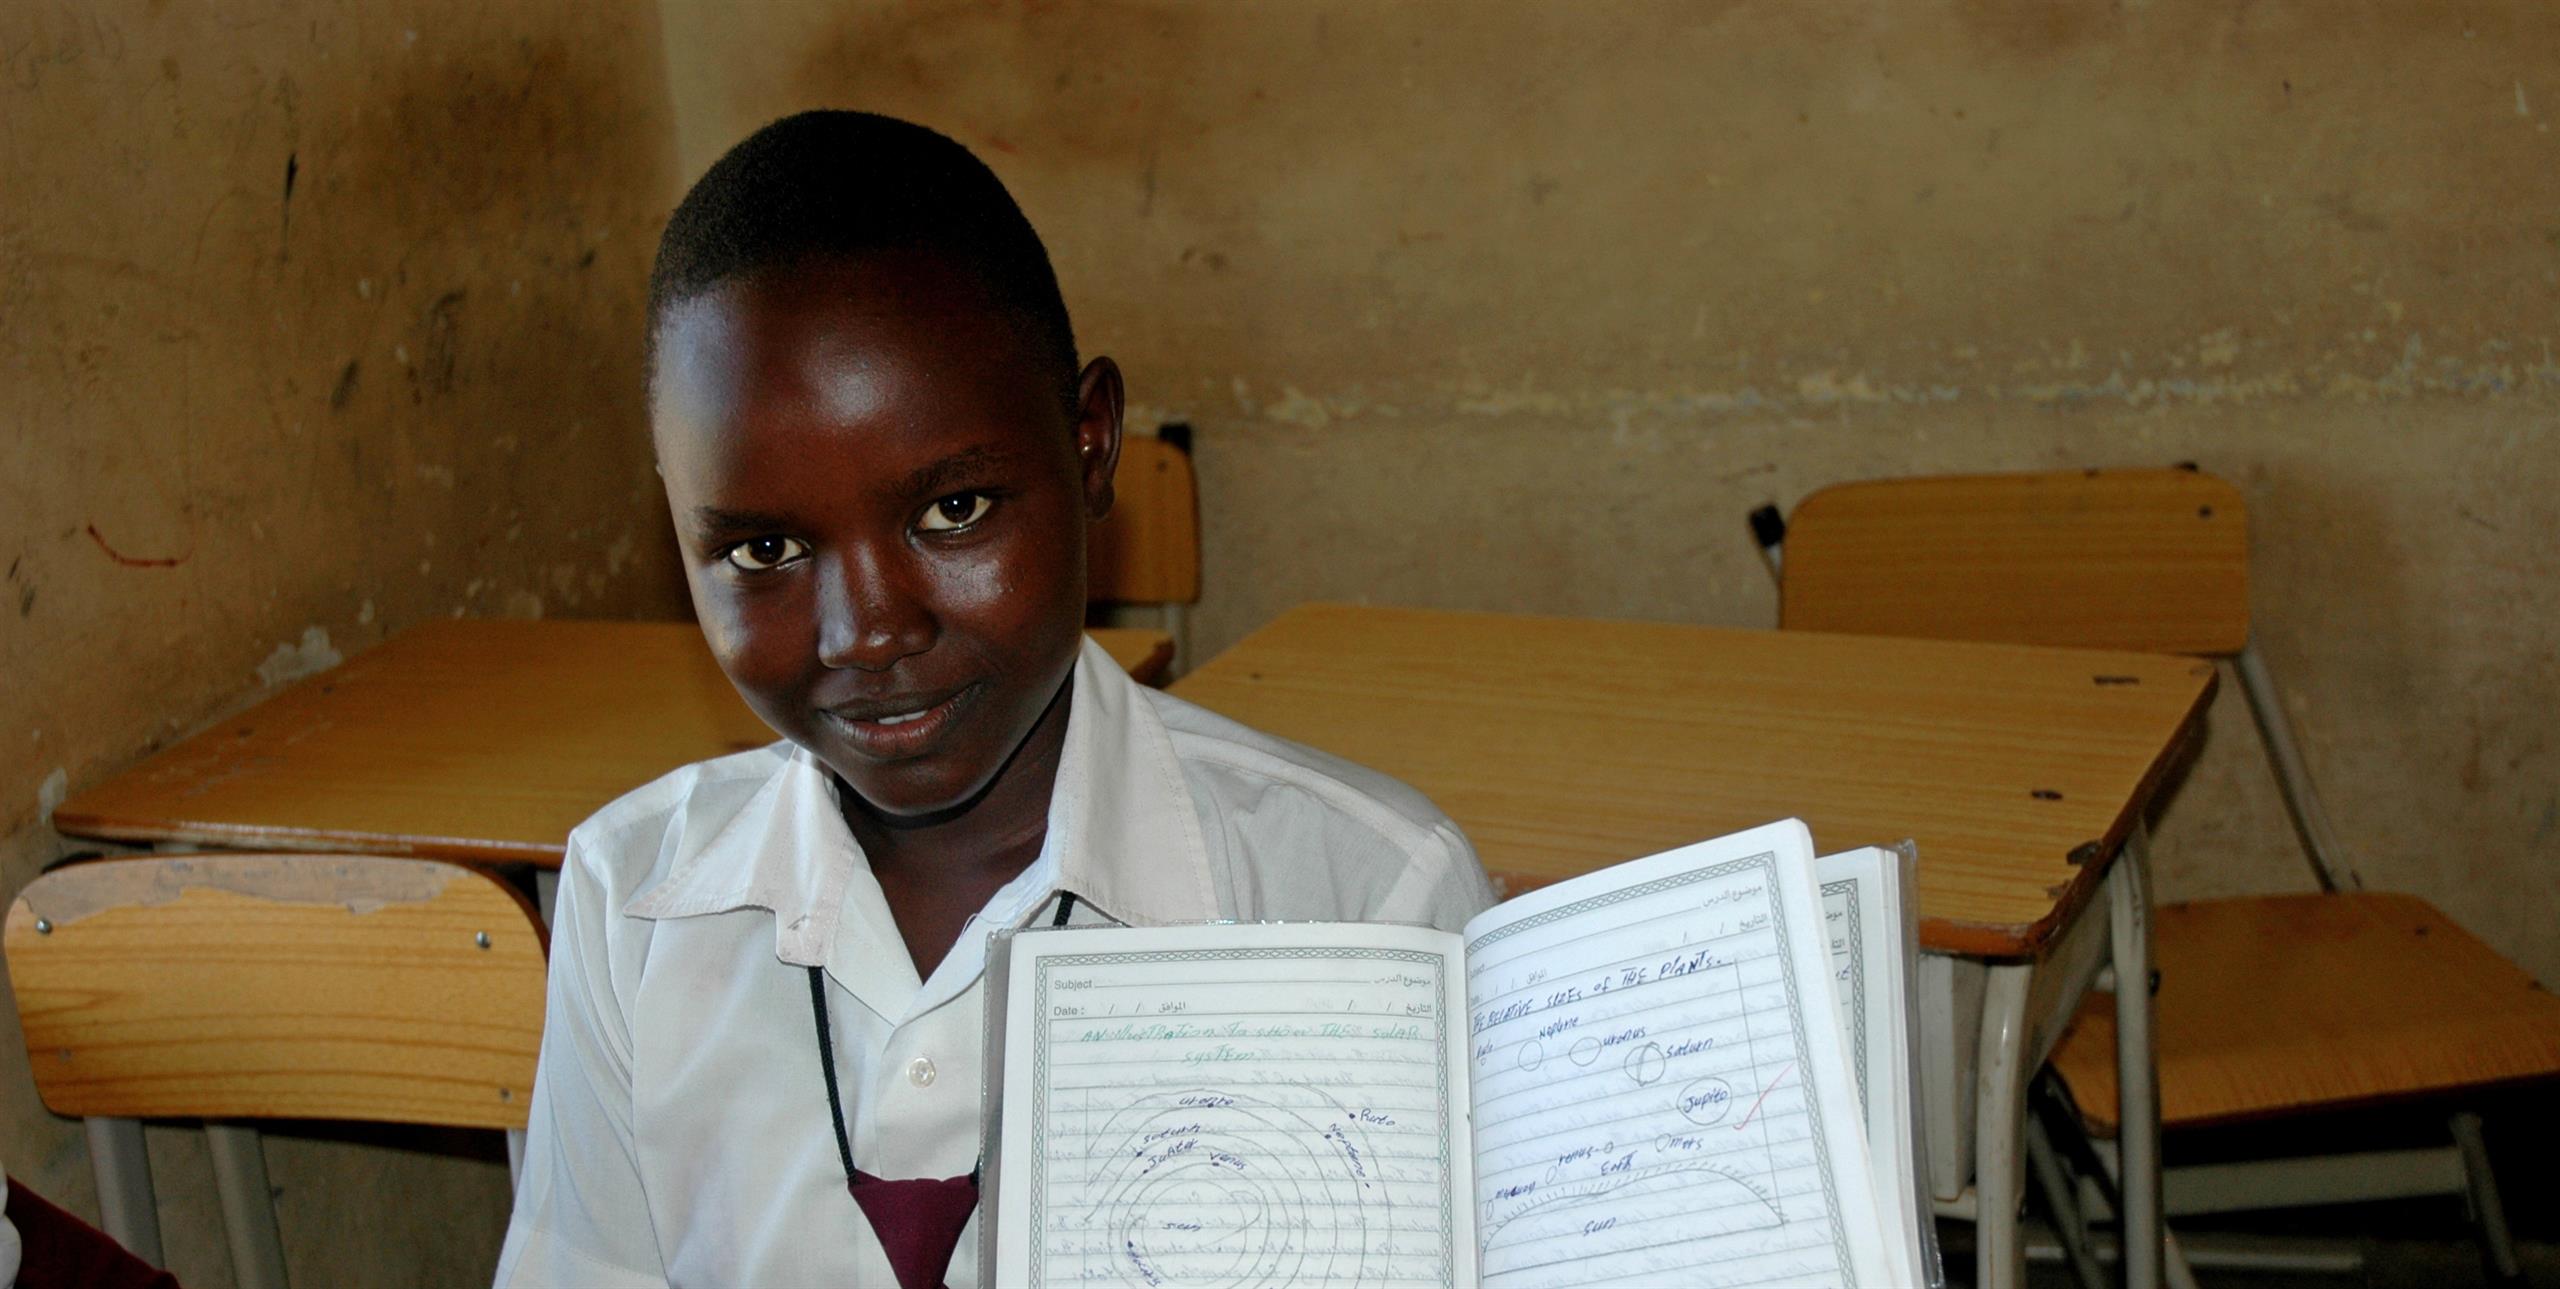 School girl in South Sudan showing her workbook